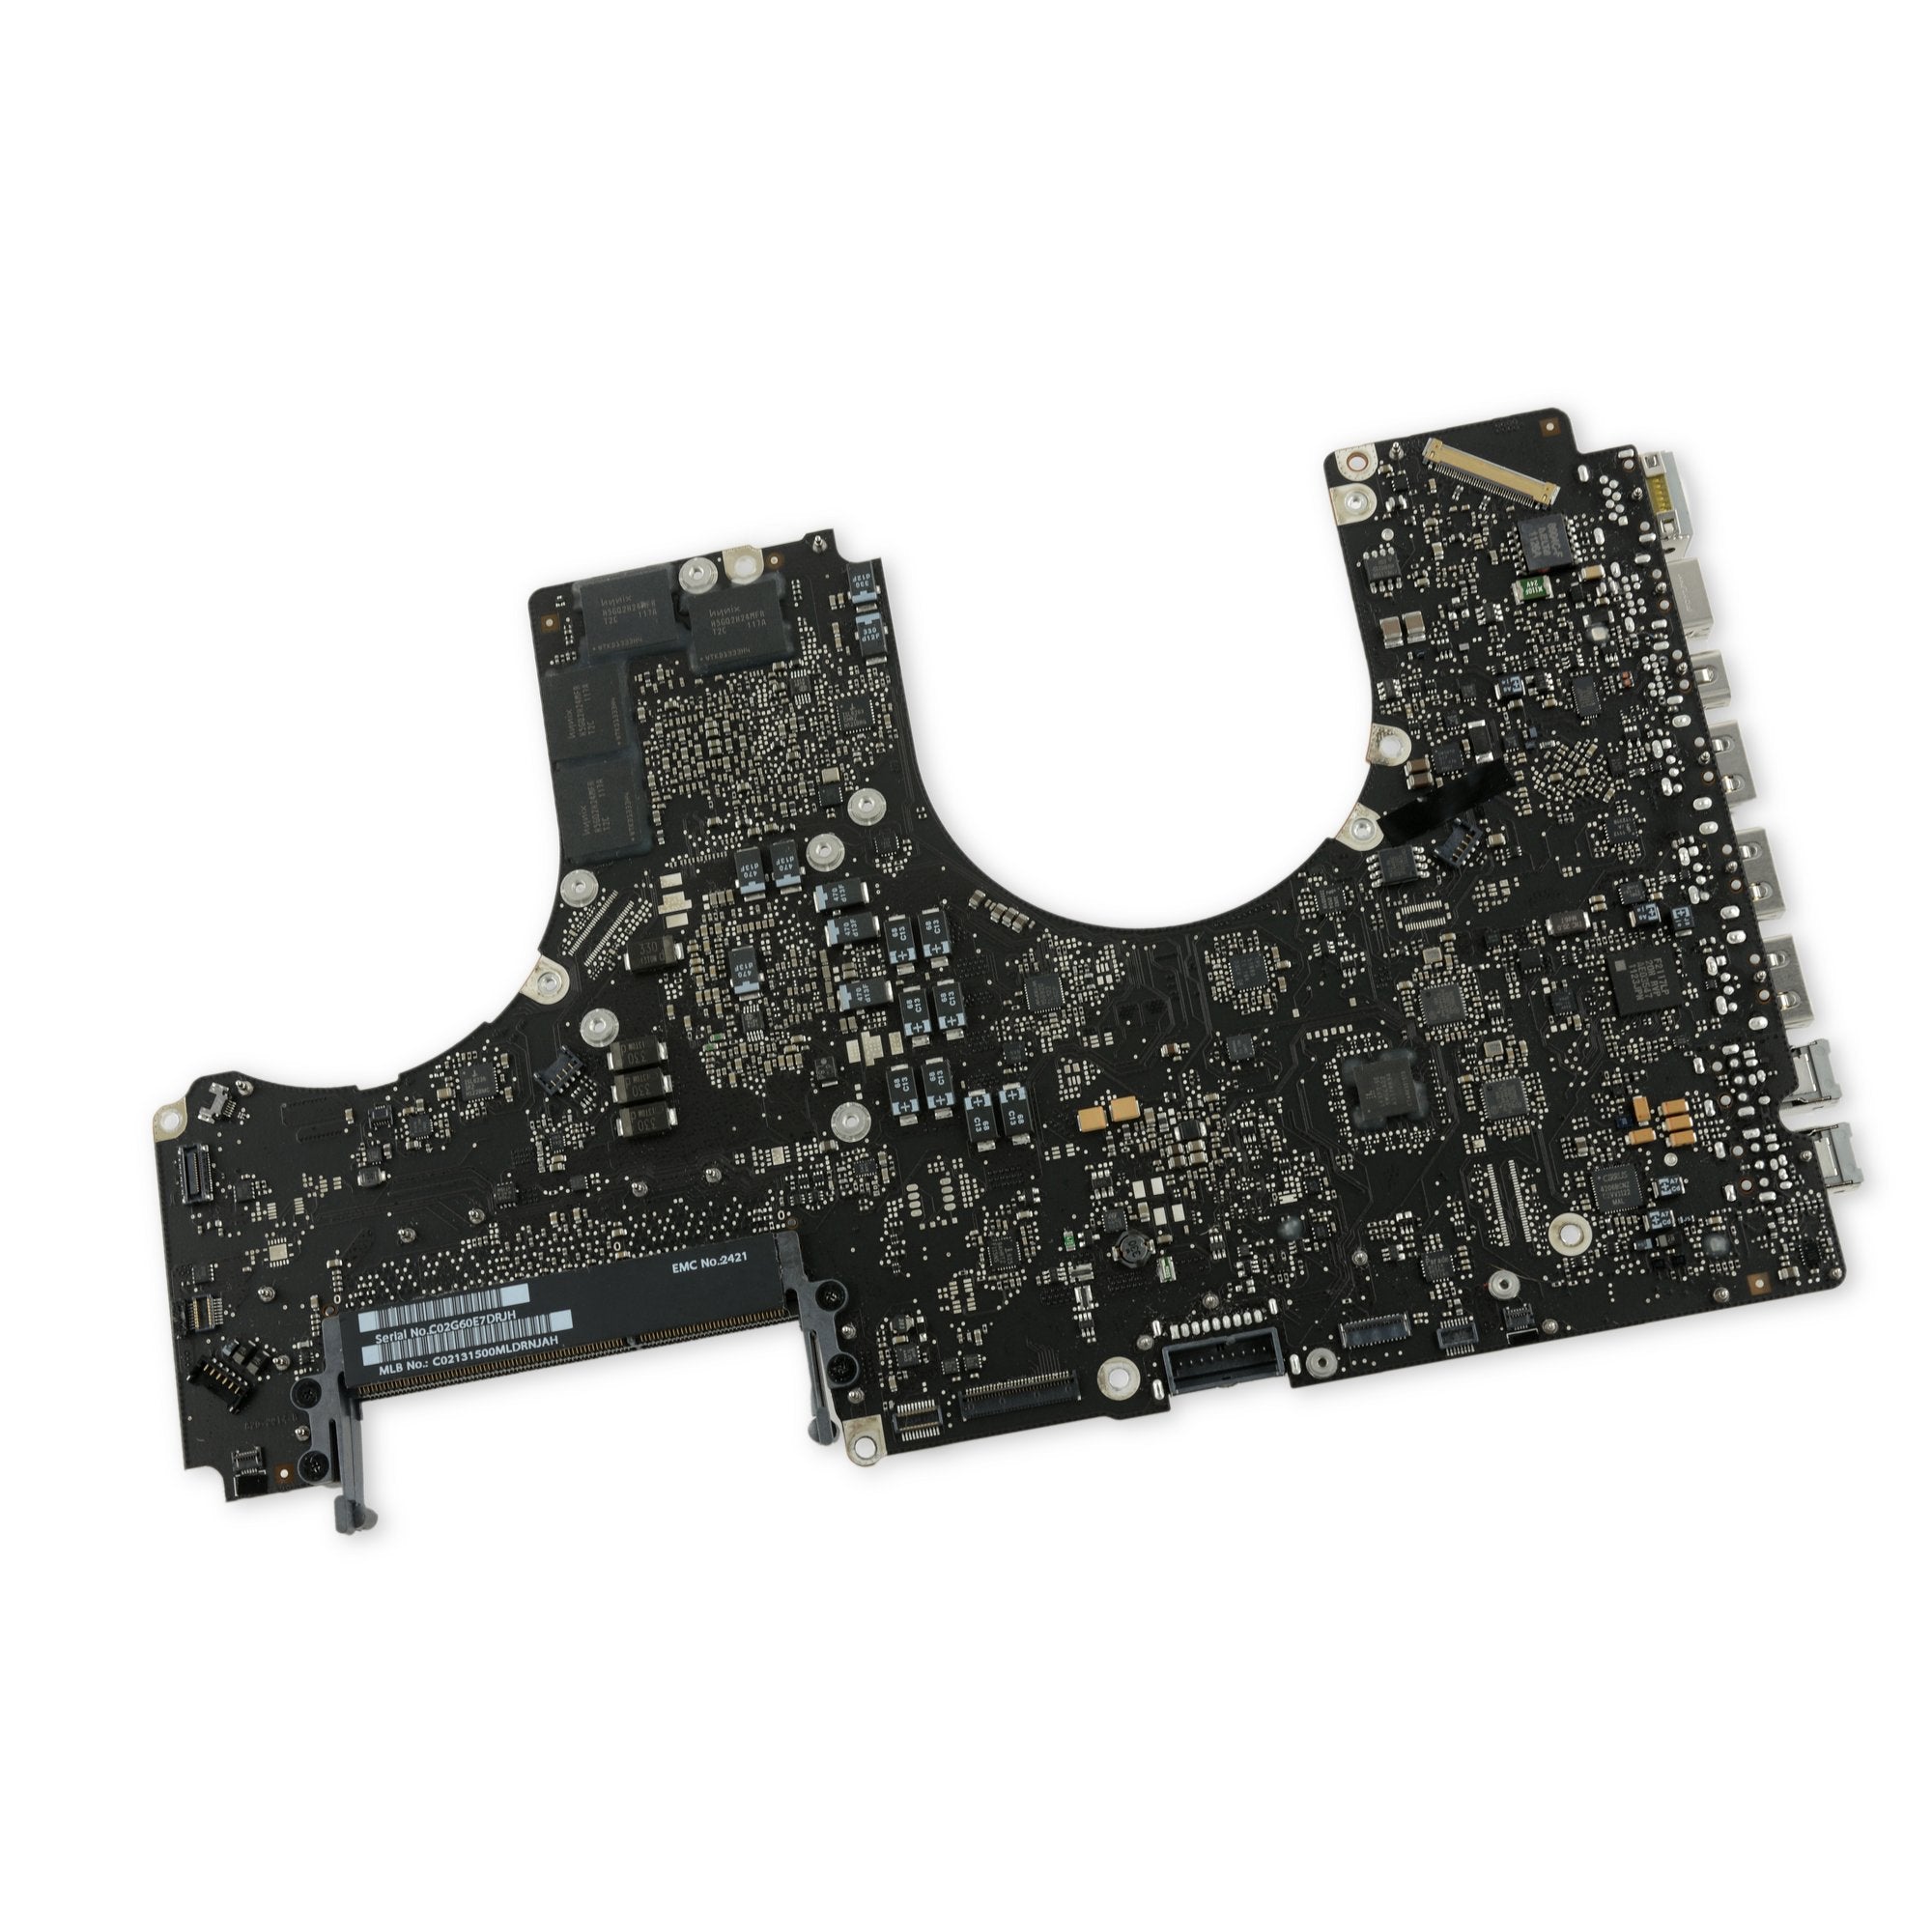 MacBook Pro 17" Unibody (Early 2011) 2.2 GHz Logic Board